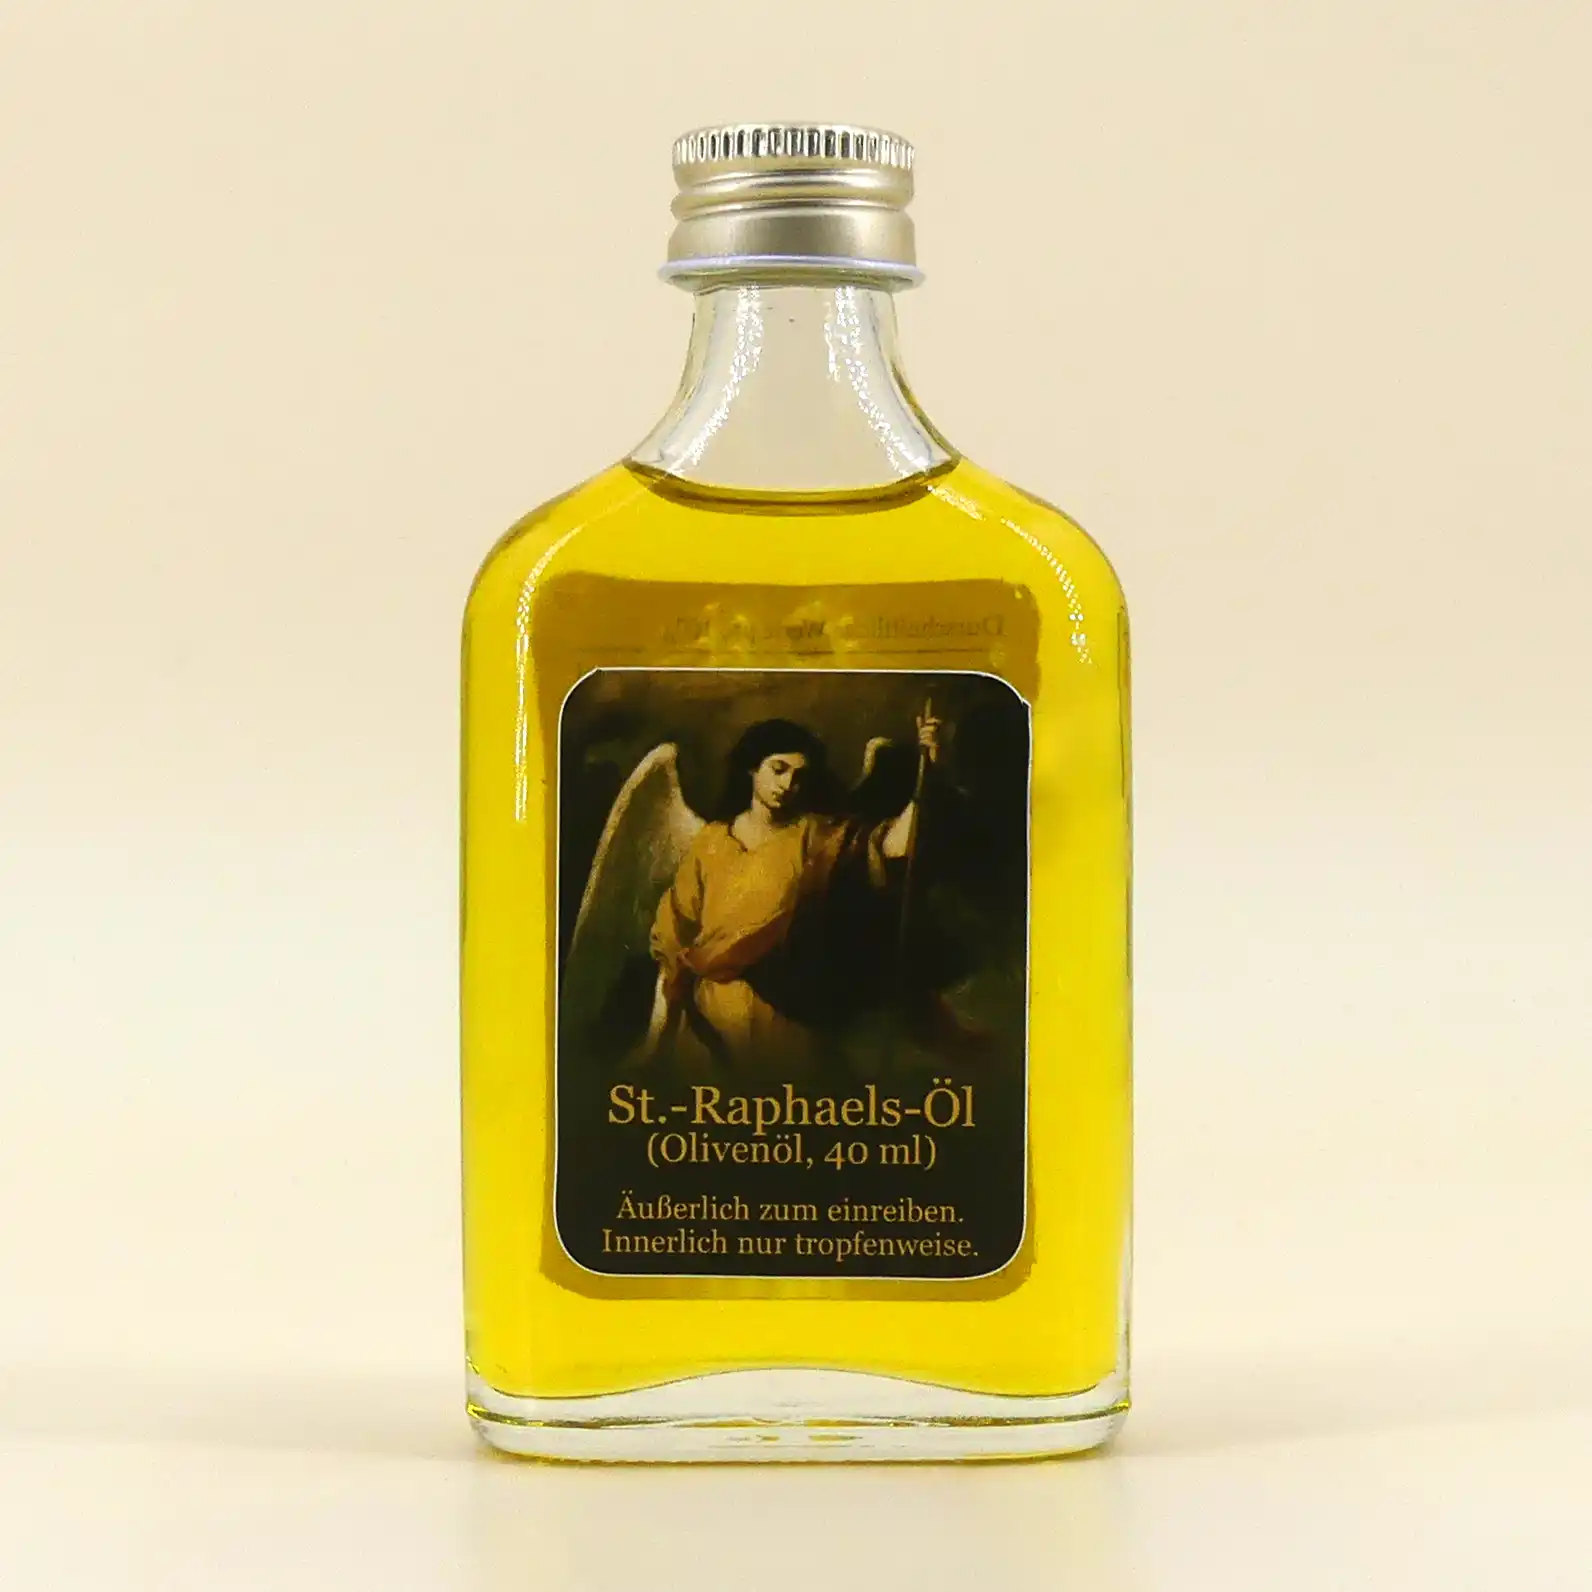 St. Raphaels-Öl geweiht